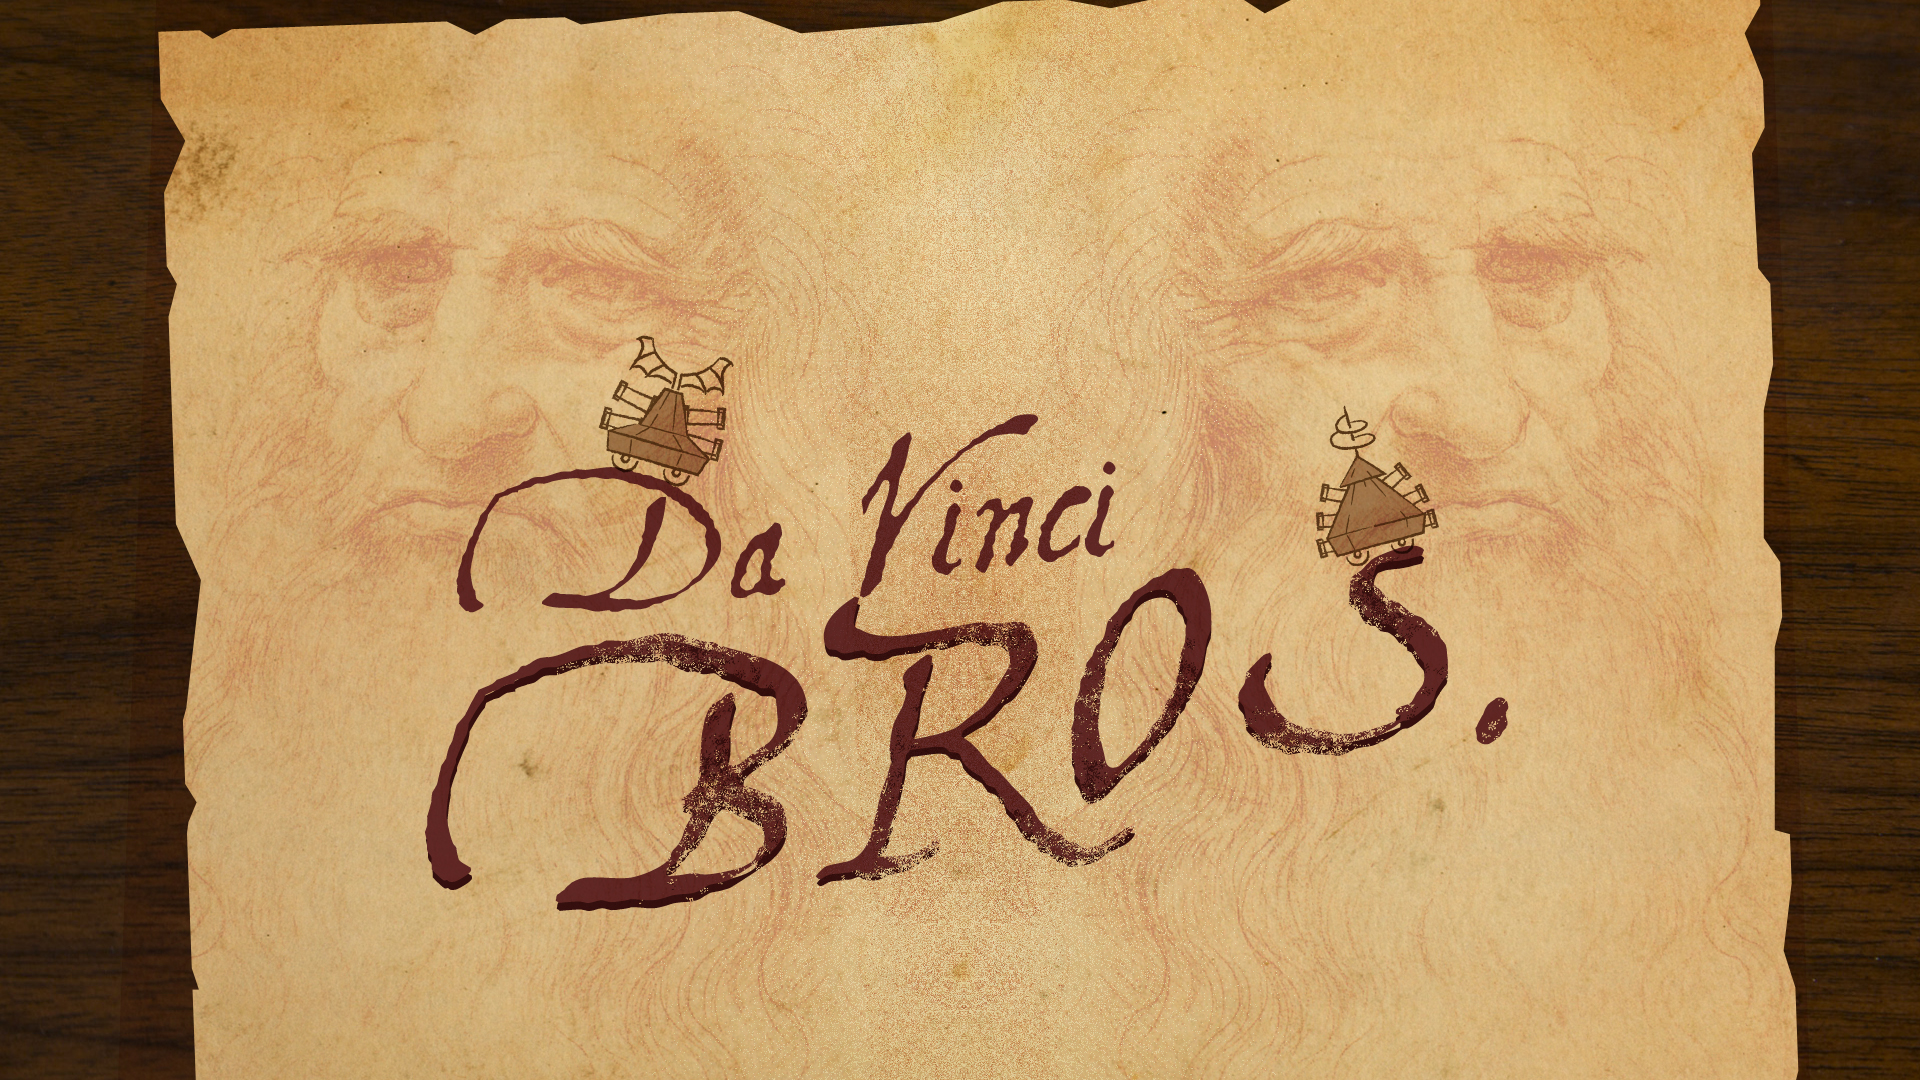 Da Vinci Bros.